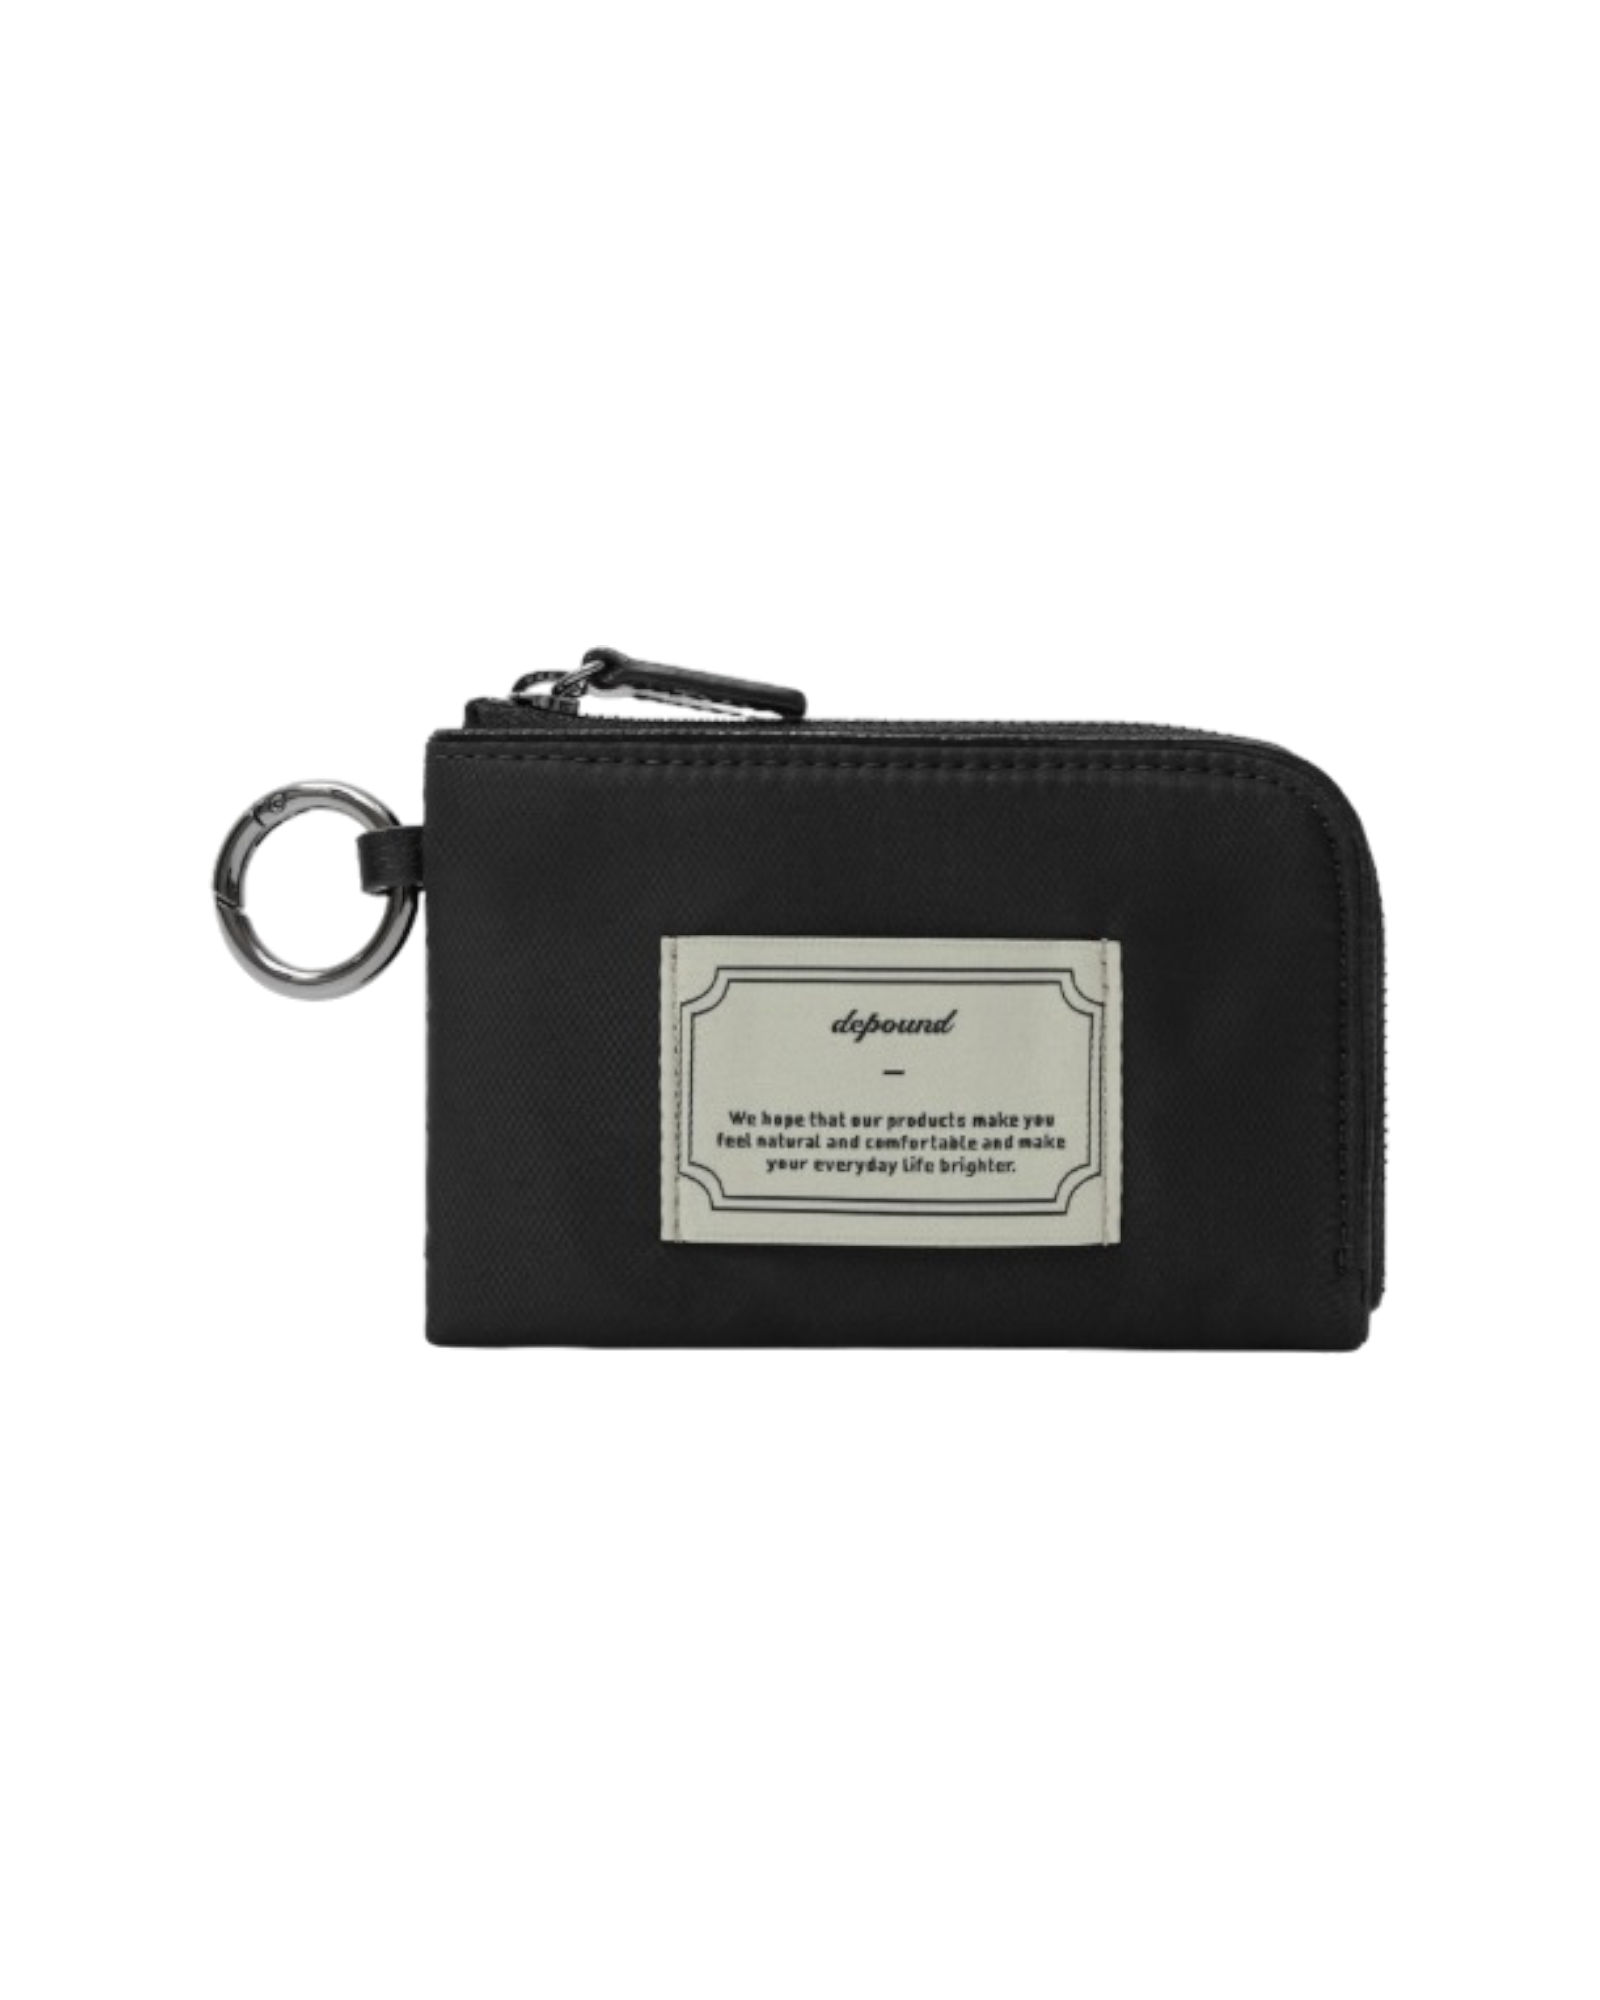 Foret Zip-wallet In Black